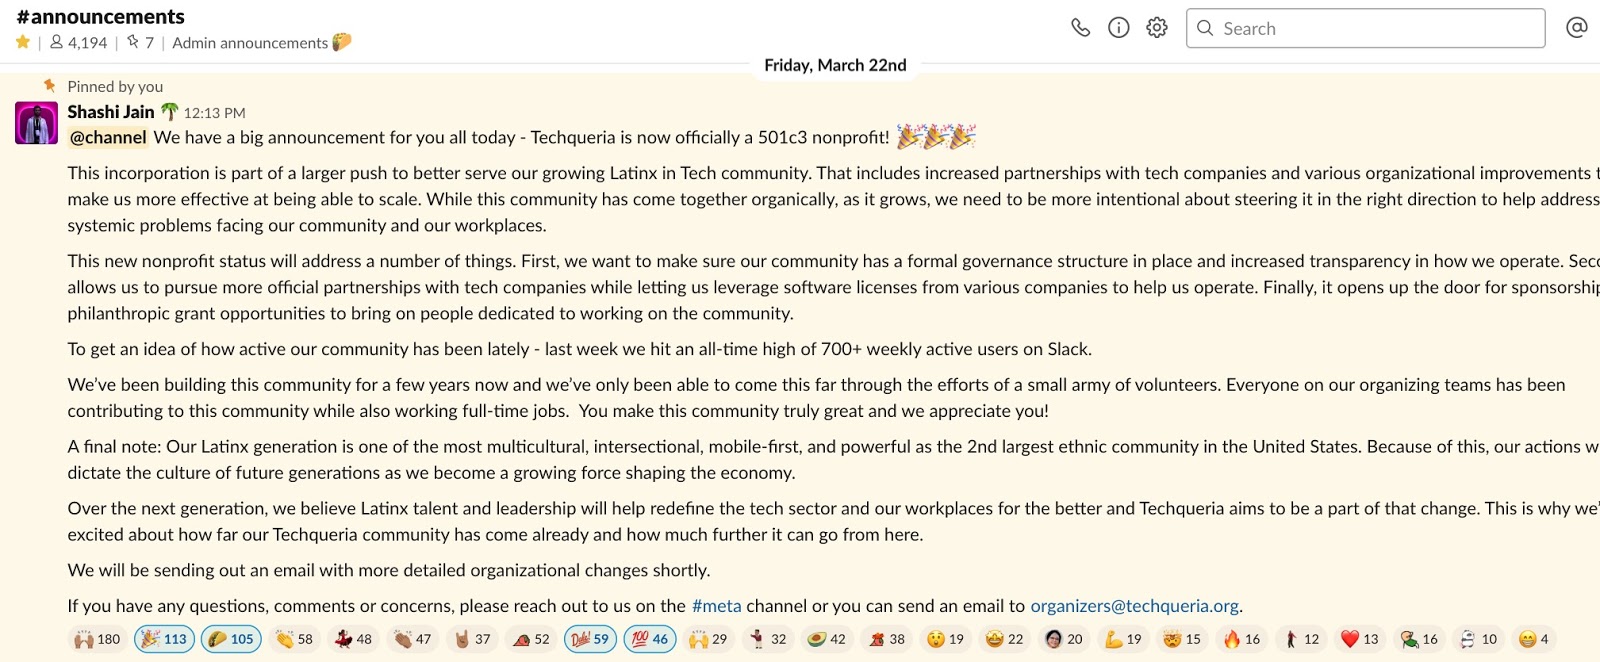 Slack channel announcement with Techqueria updates, including 501c3 status.